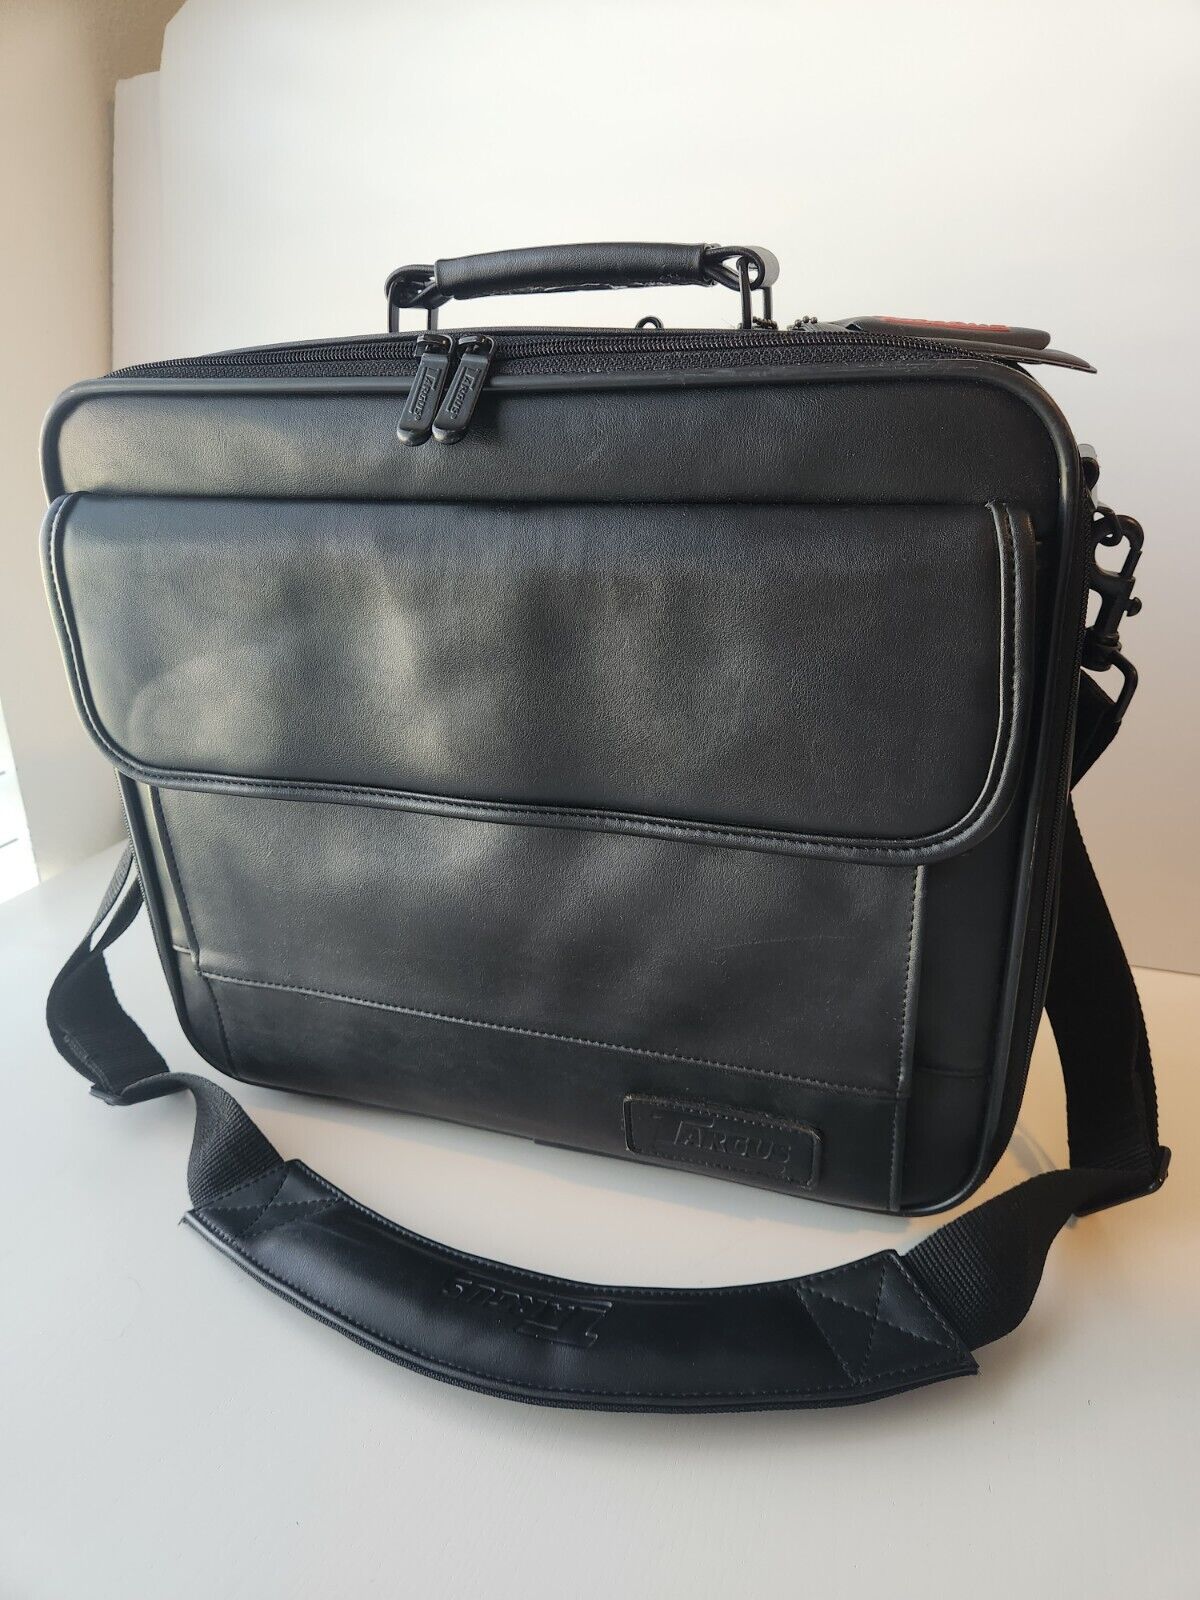 GORGEOUS Leather Targus CUN1/OCU2 Laptop Computer Case Bag Carry On Luggage 1999